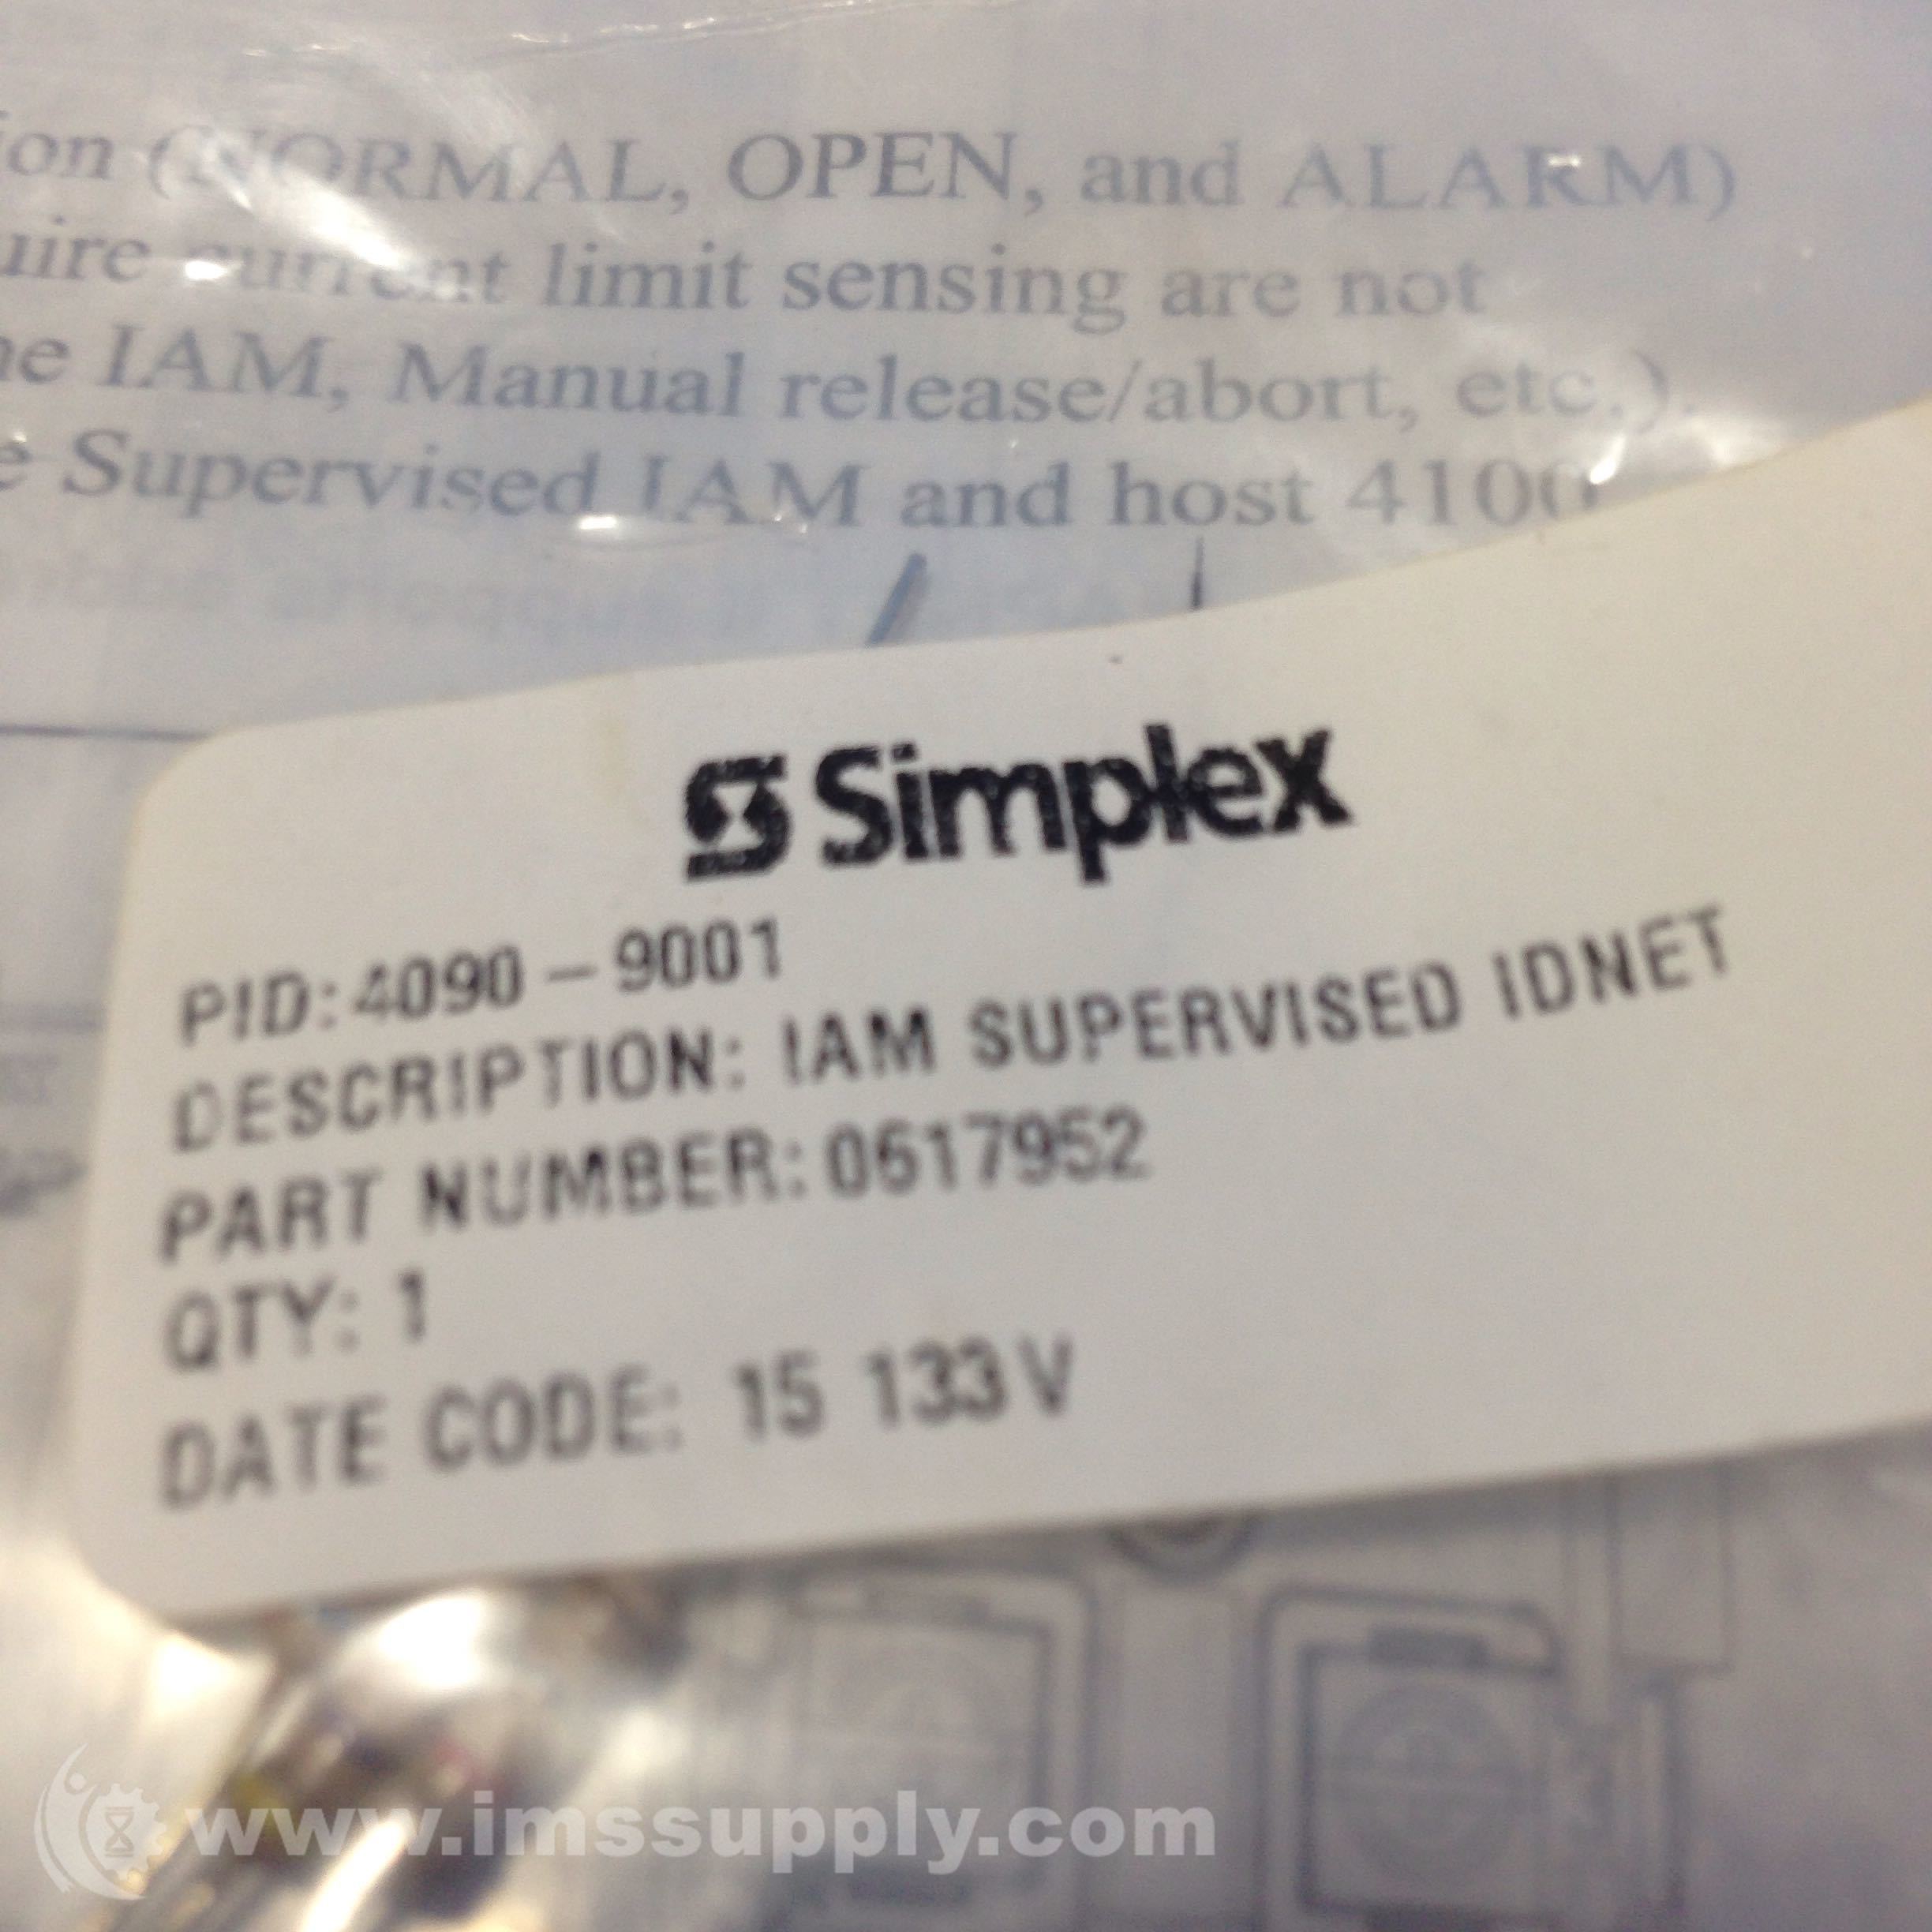 SIMPLEX 4090-9001 IAM SUPERVISED IDNET MODULE. NEW +440 IN STOCK